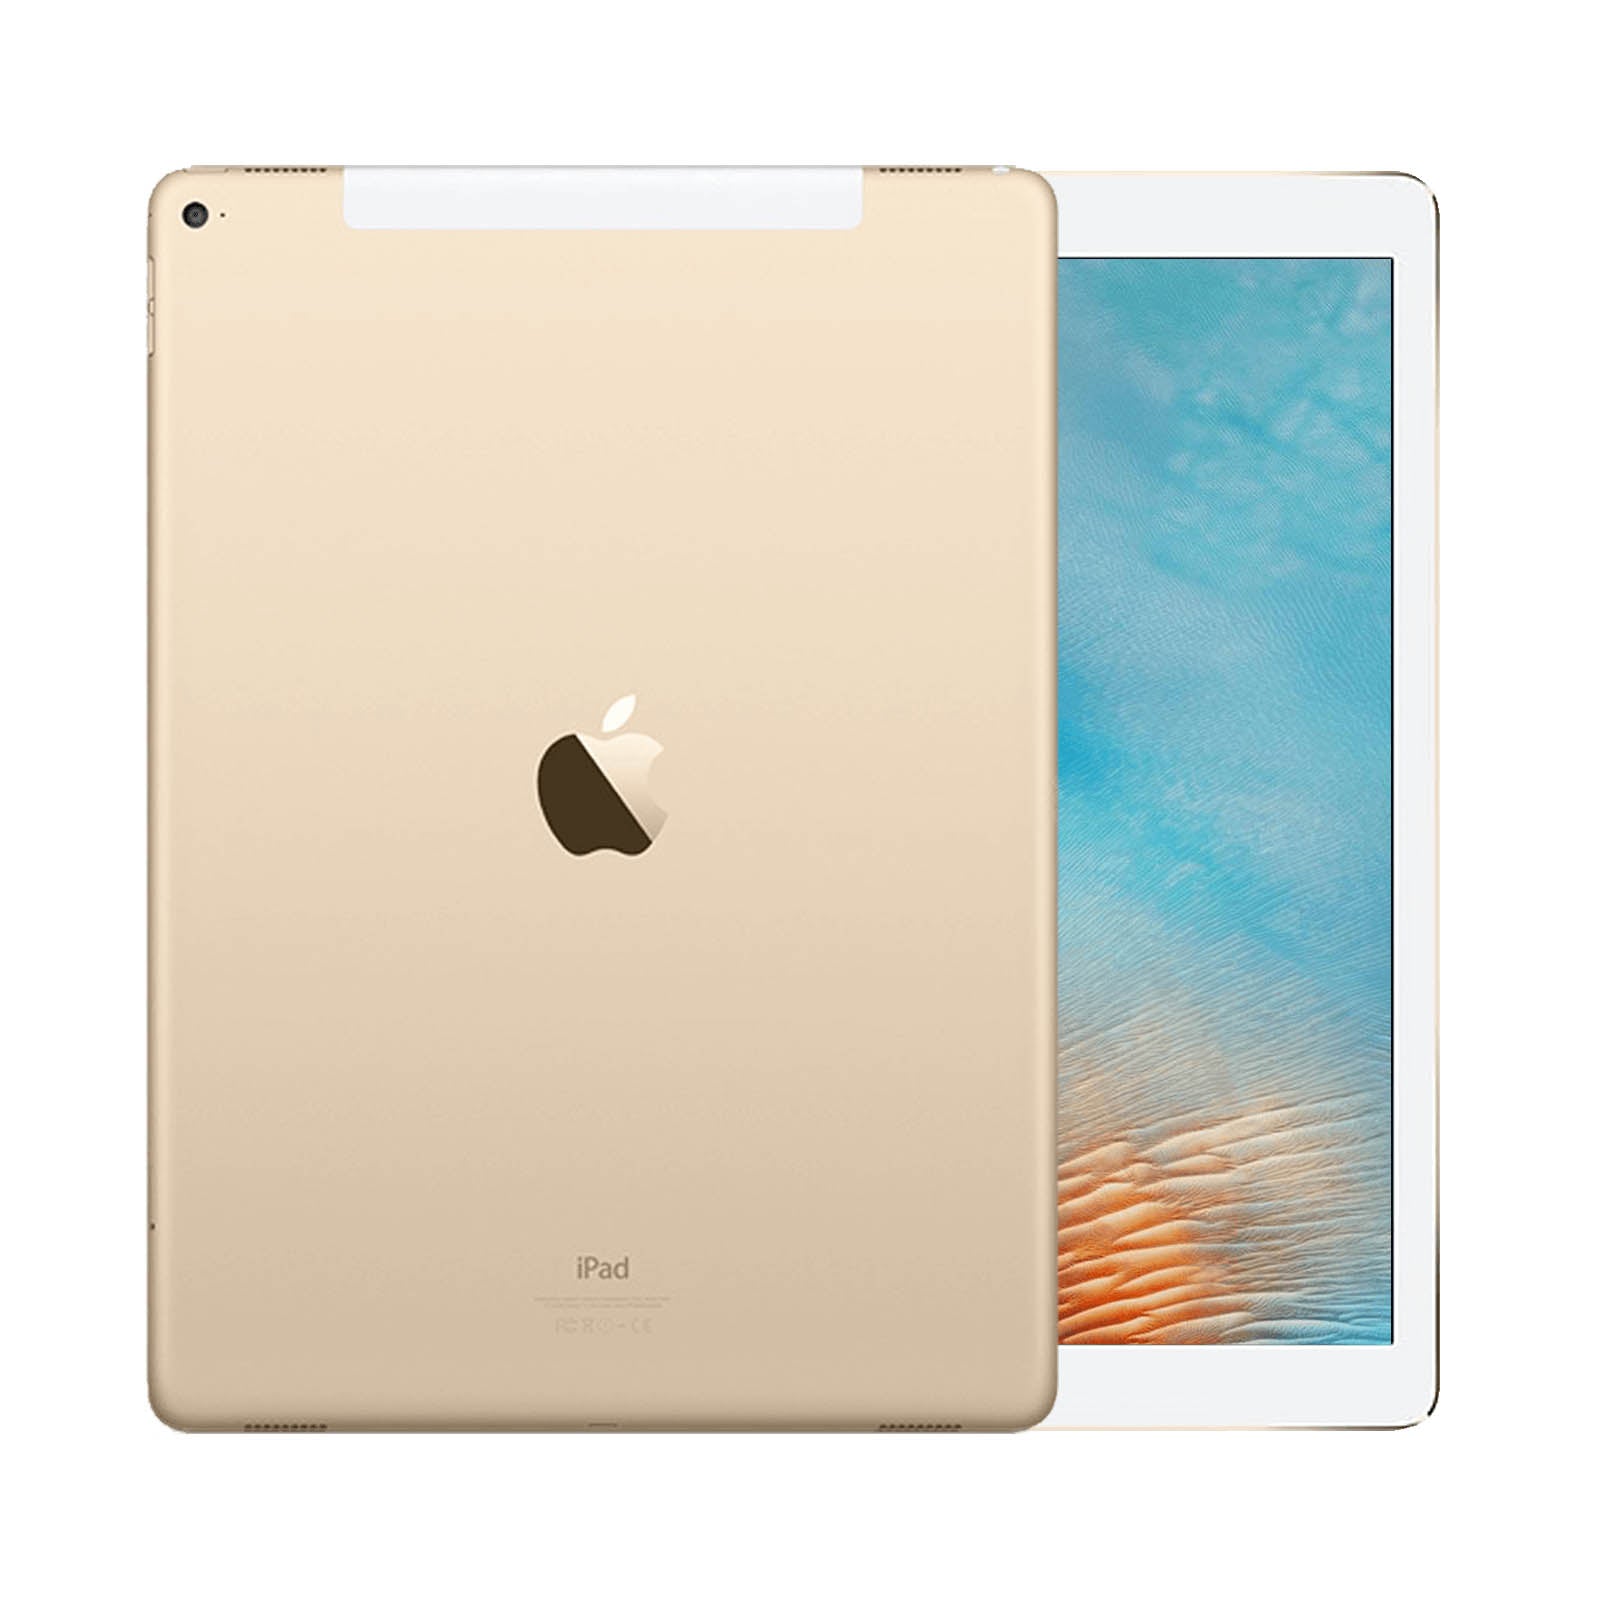 iPad Pro 12.9 Inch 2nd Gen 512GB Gold Very Good - Unlocked